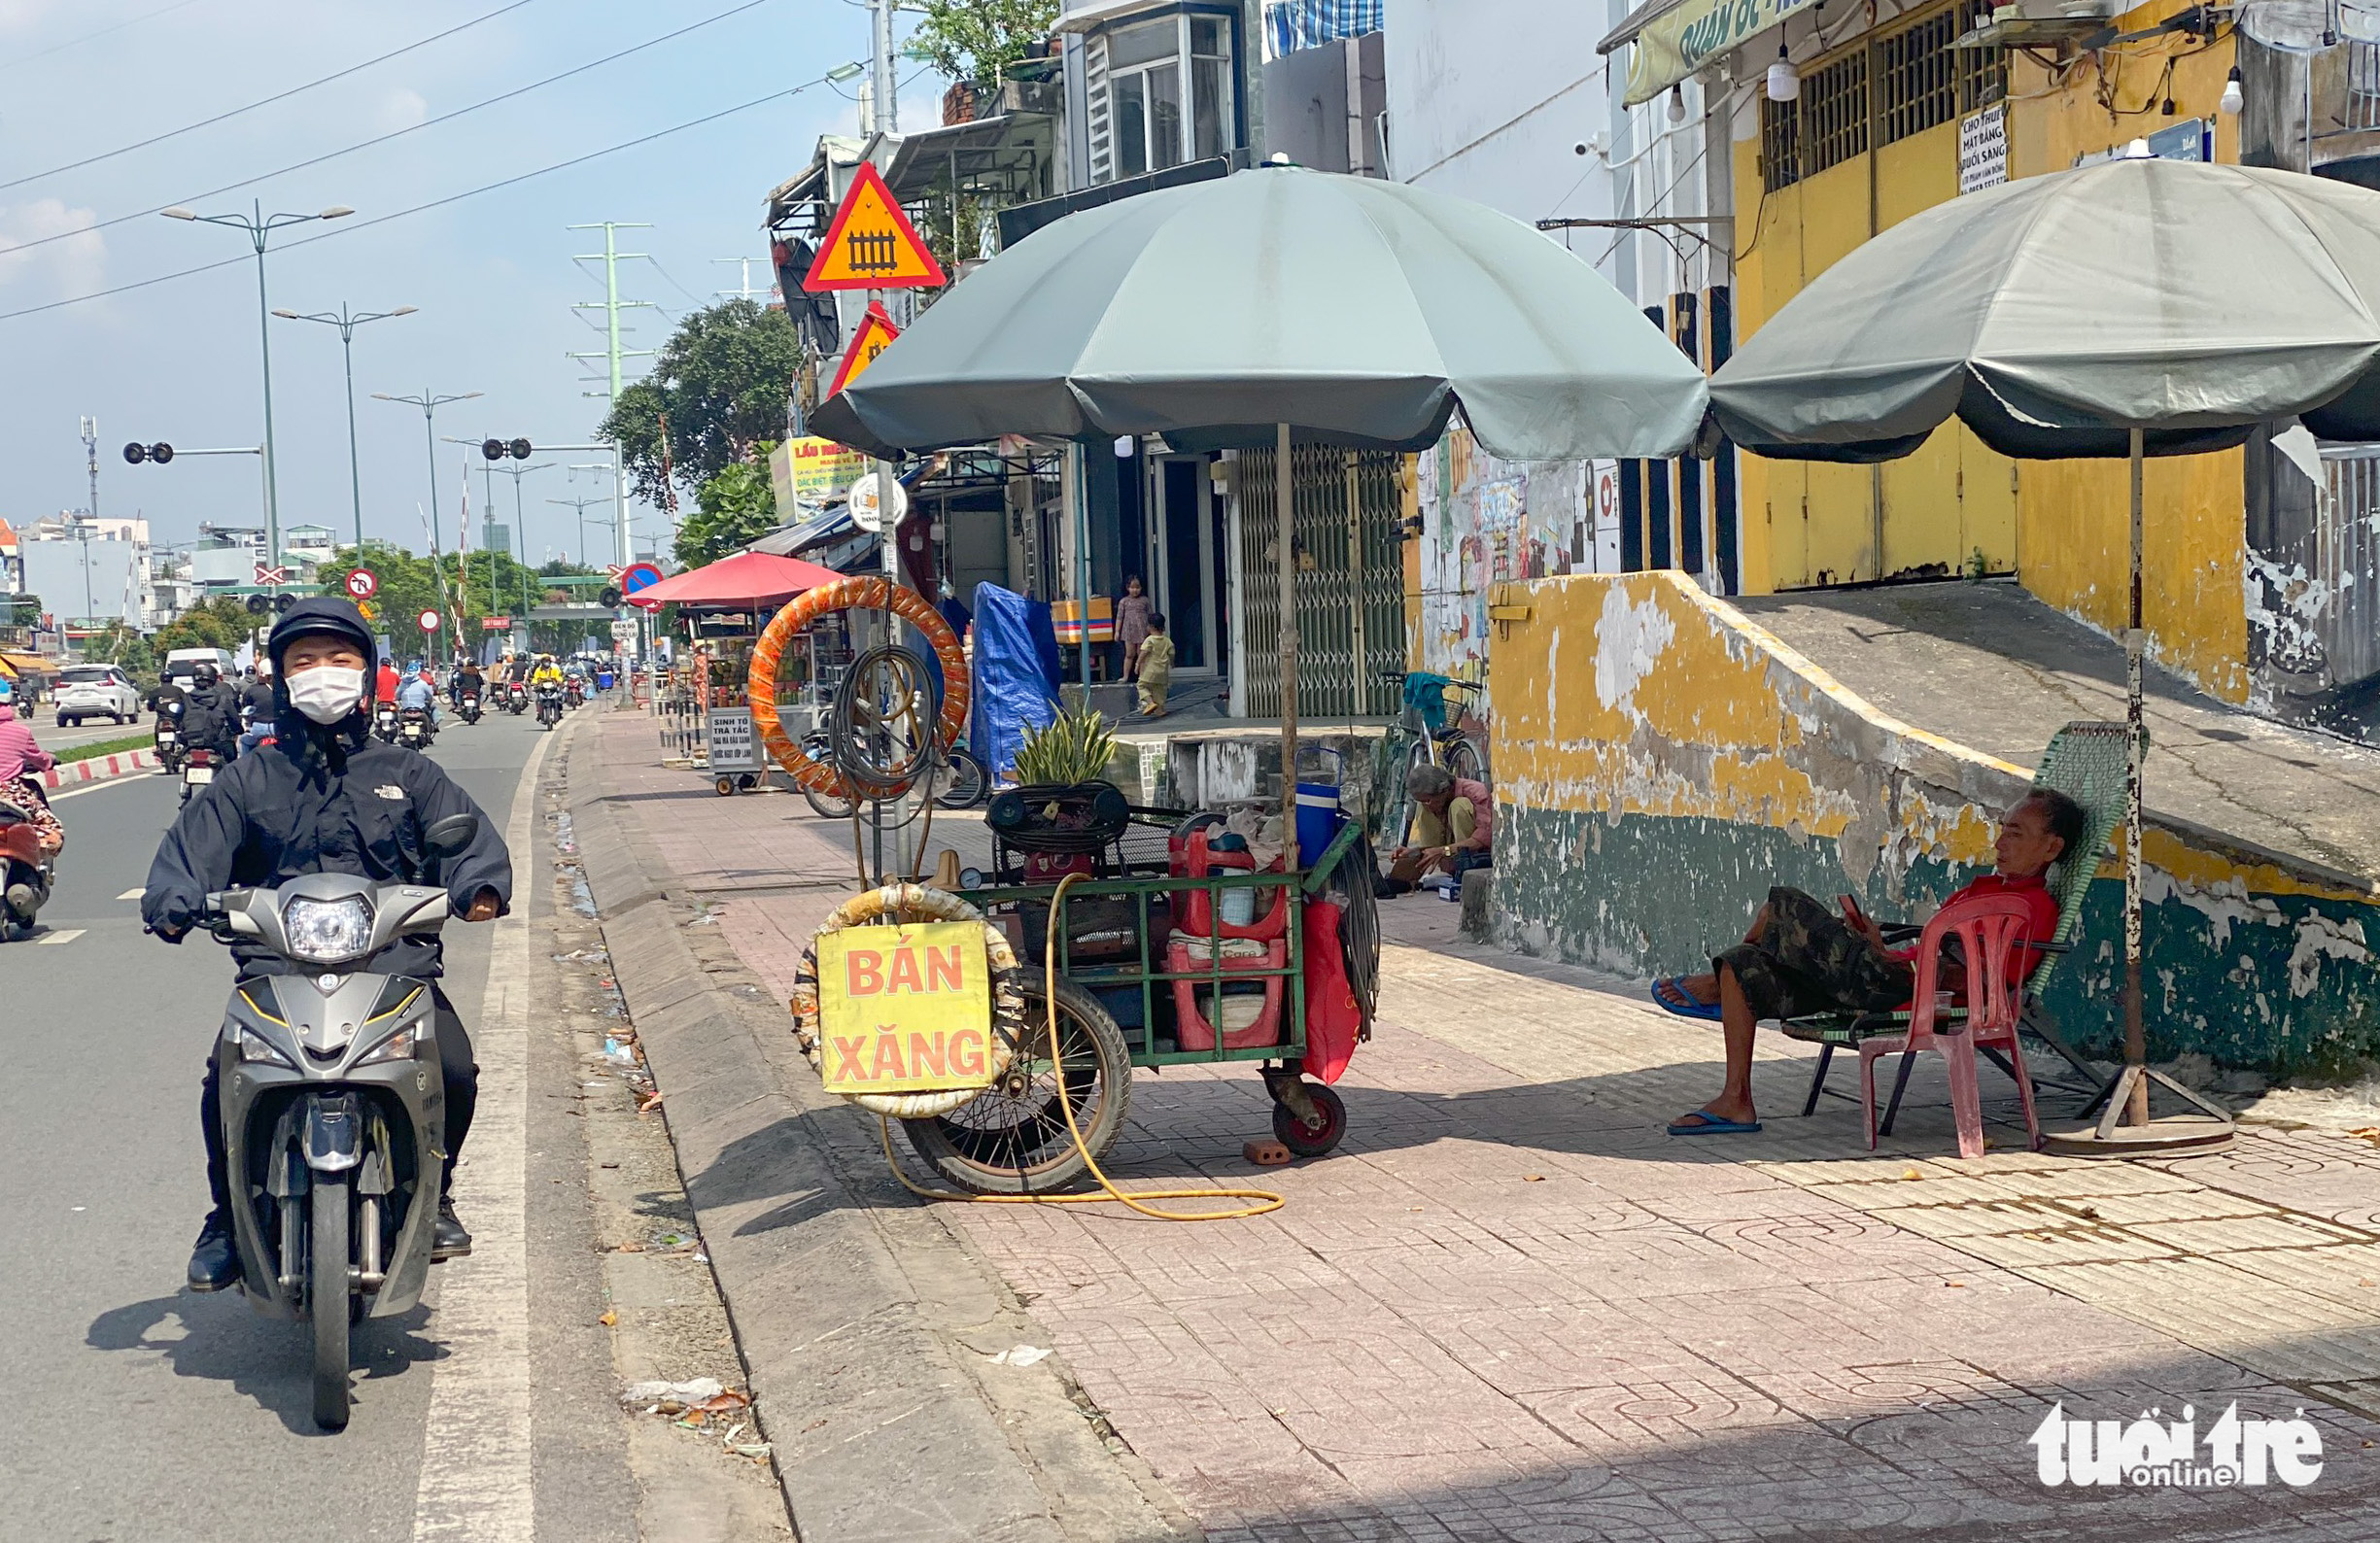 A motorbike repairman sells gasoline along Pham Van Dong Street in Go Vap District, November 5, 2022. Photo: Tuoi Tre